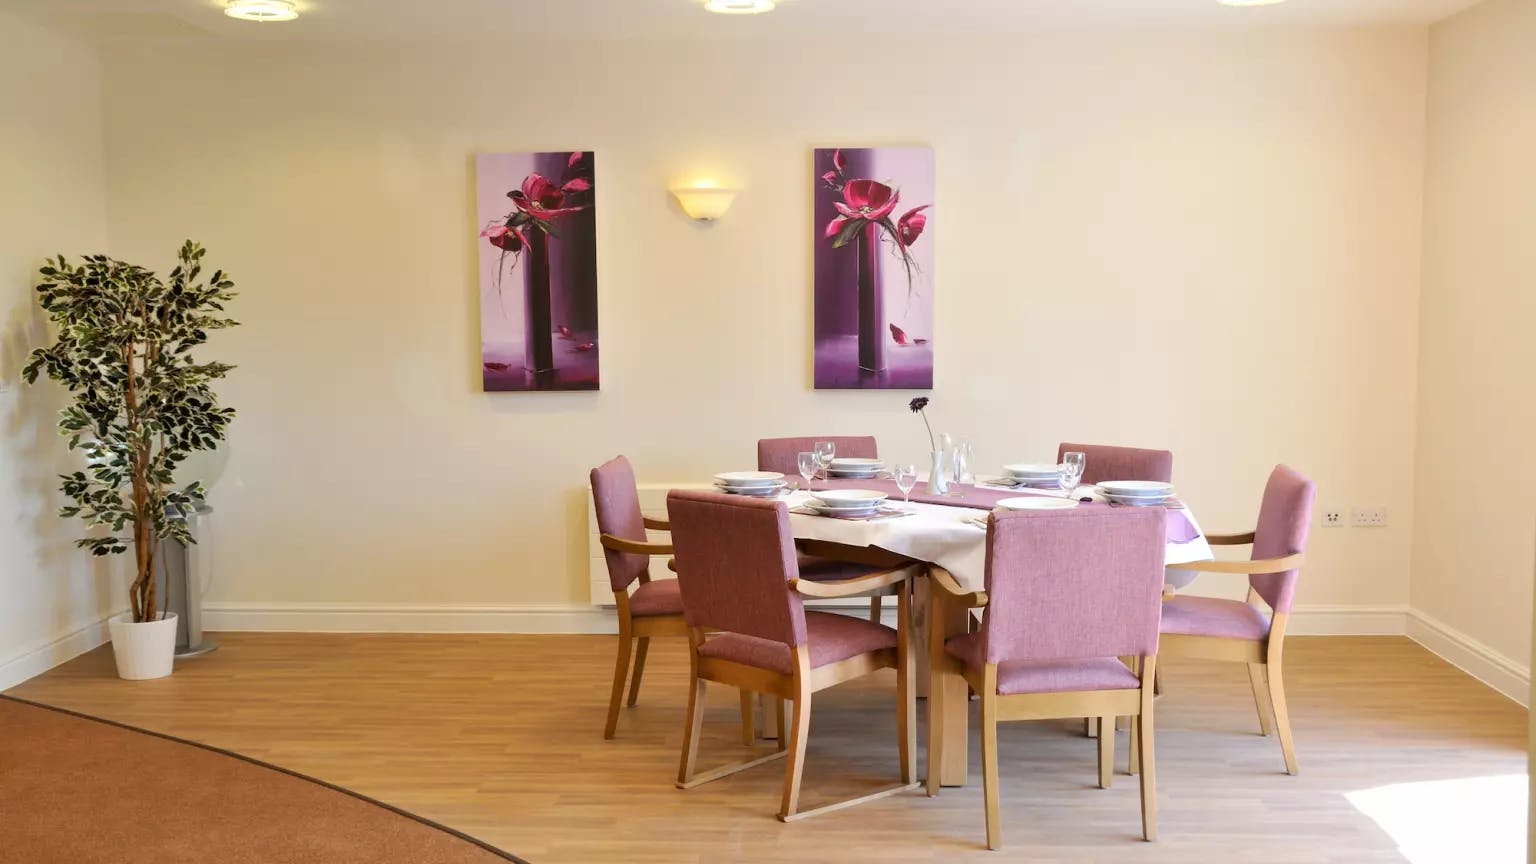 Dining room of Jubilee Court care home in Stevenage, Hertfordshire